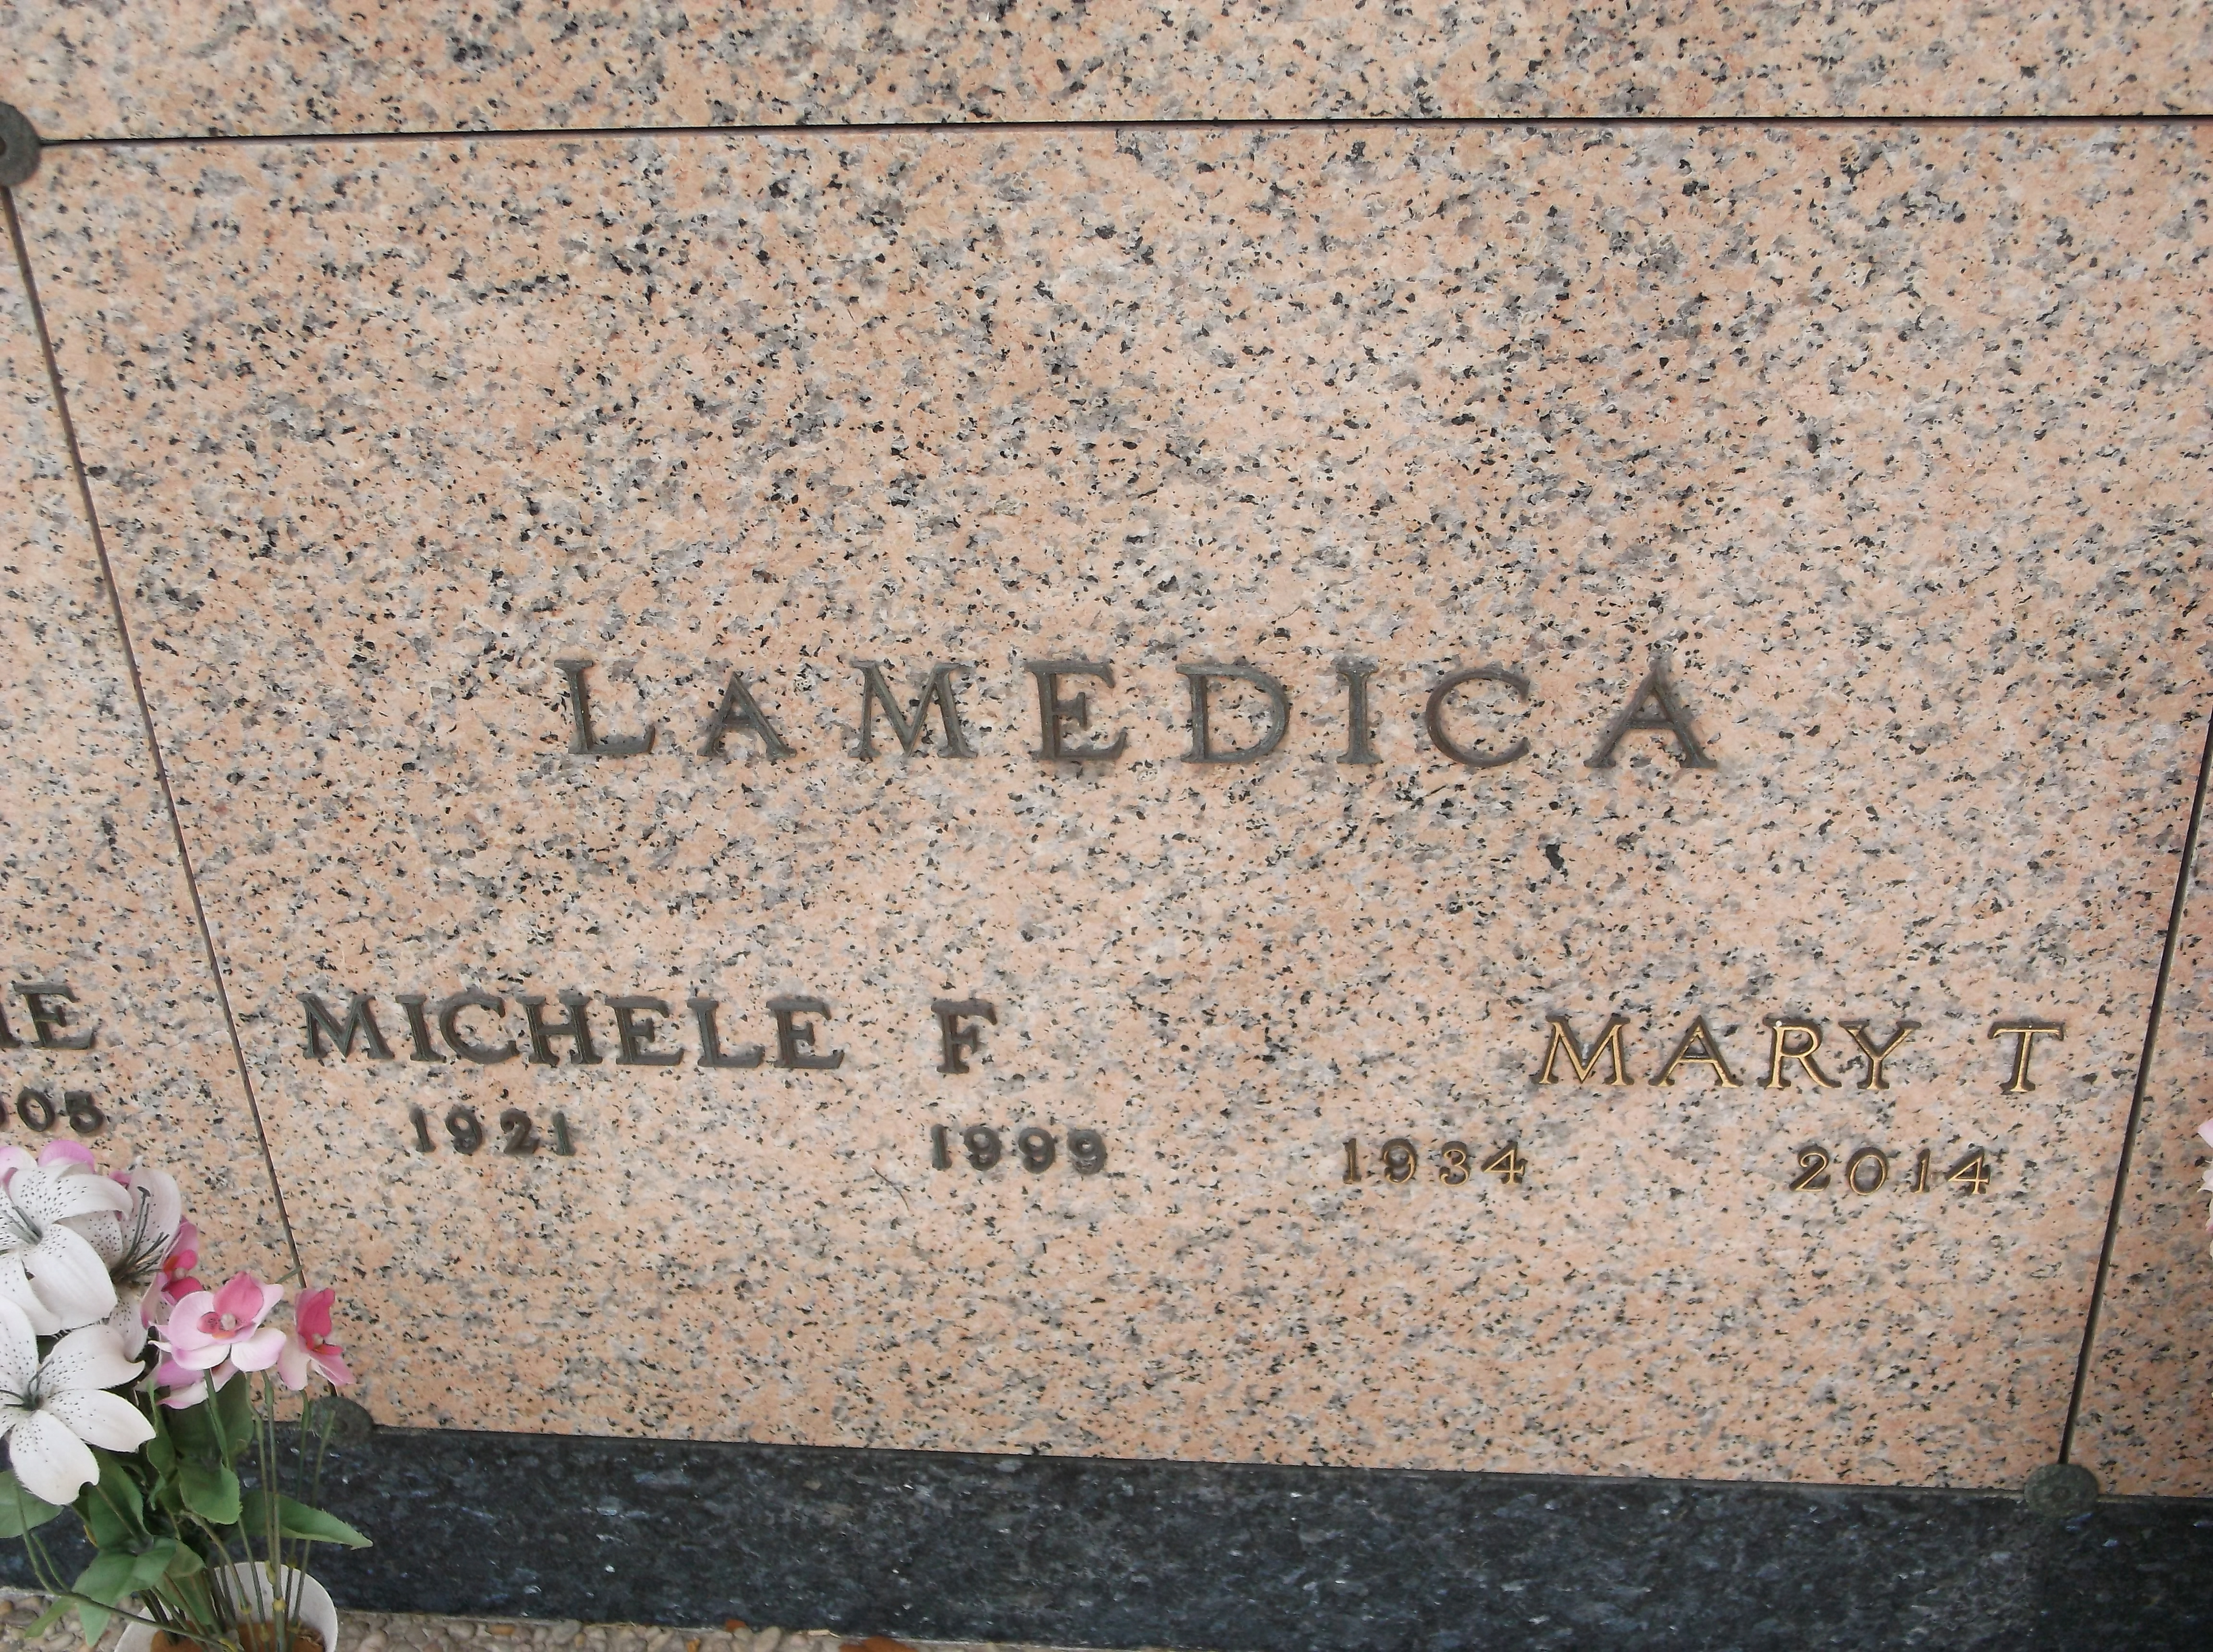 Mary T La Medica